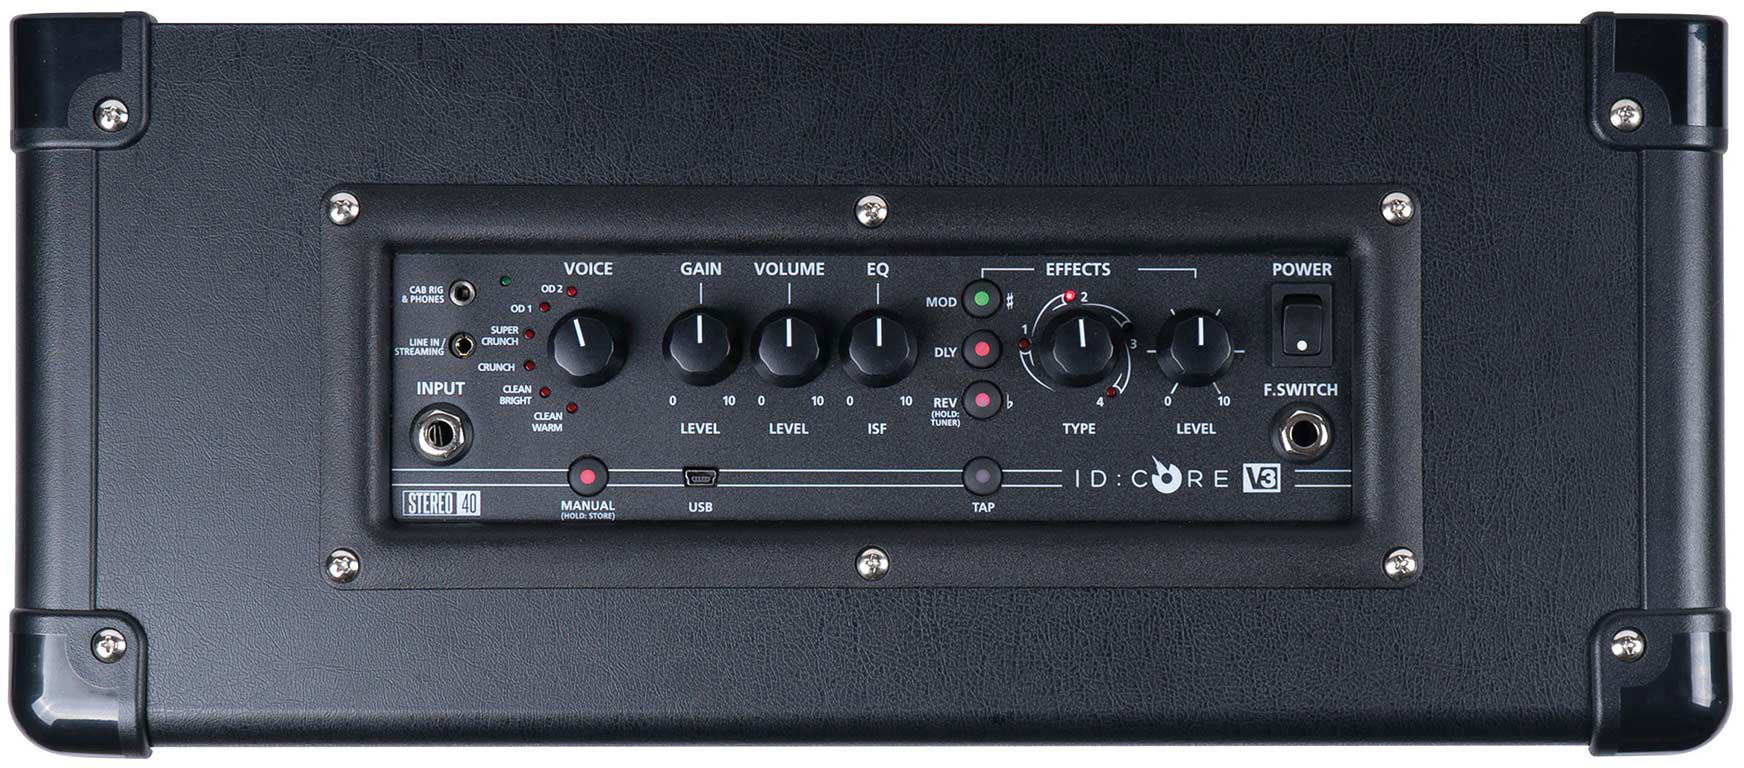 Blackstar Id:core V3 Stereo 40 2x20w 2x6.5 - Electric guitar combo amp - Variation 2